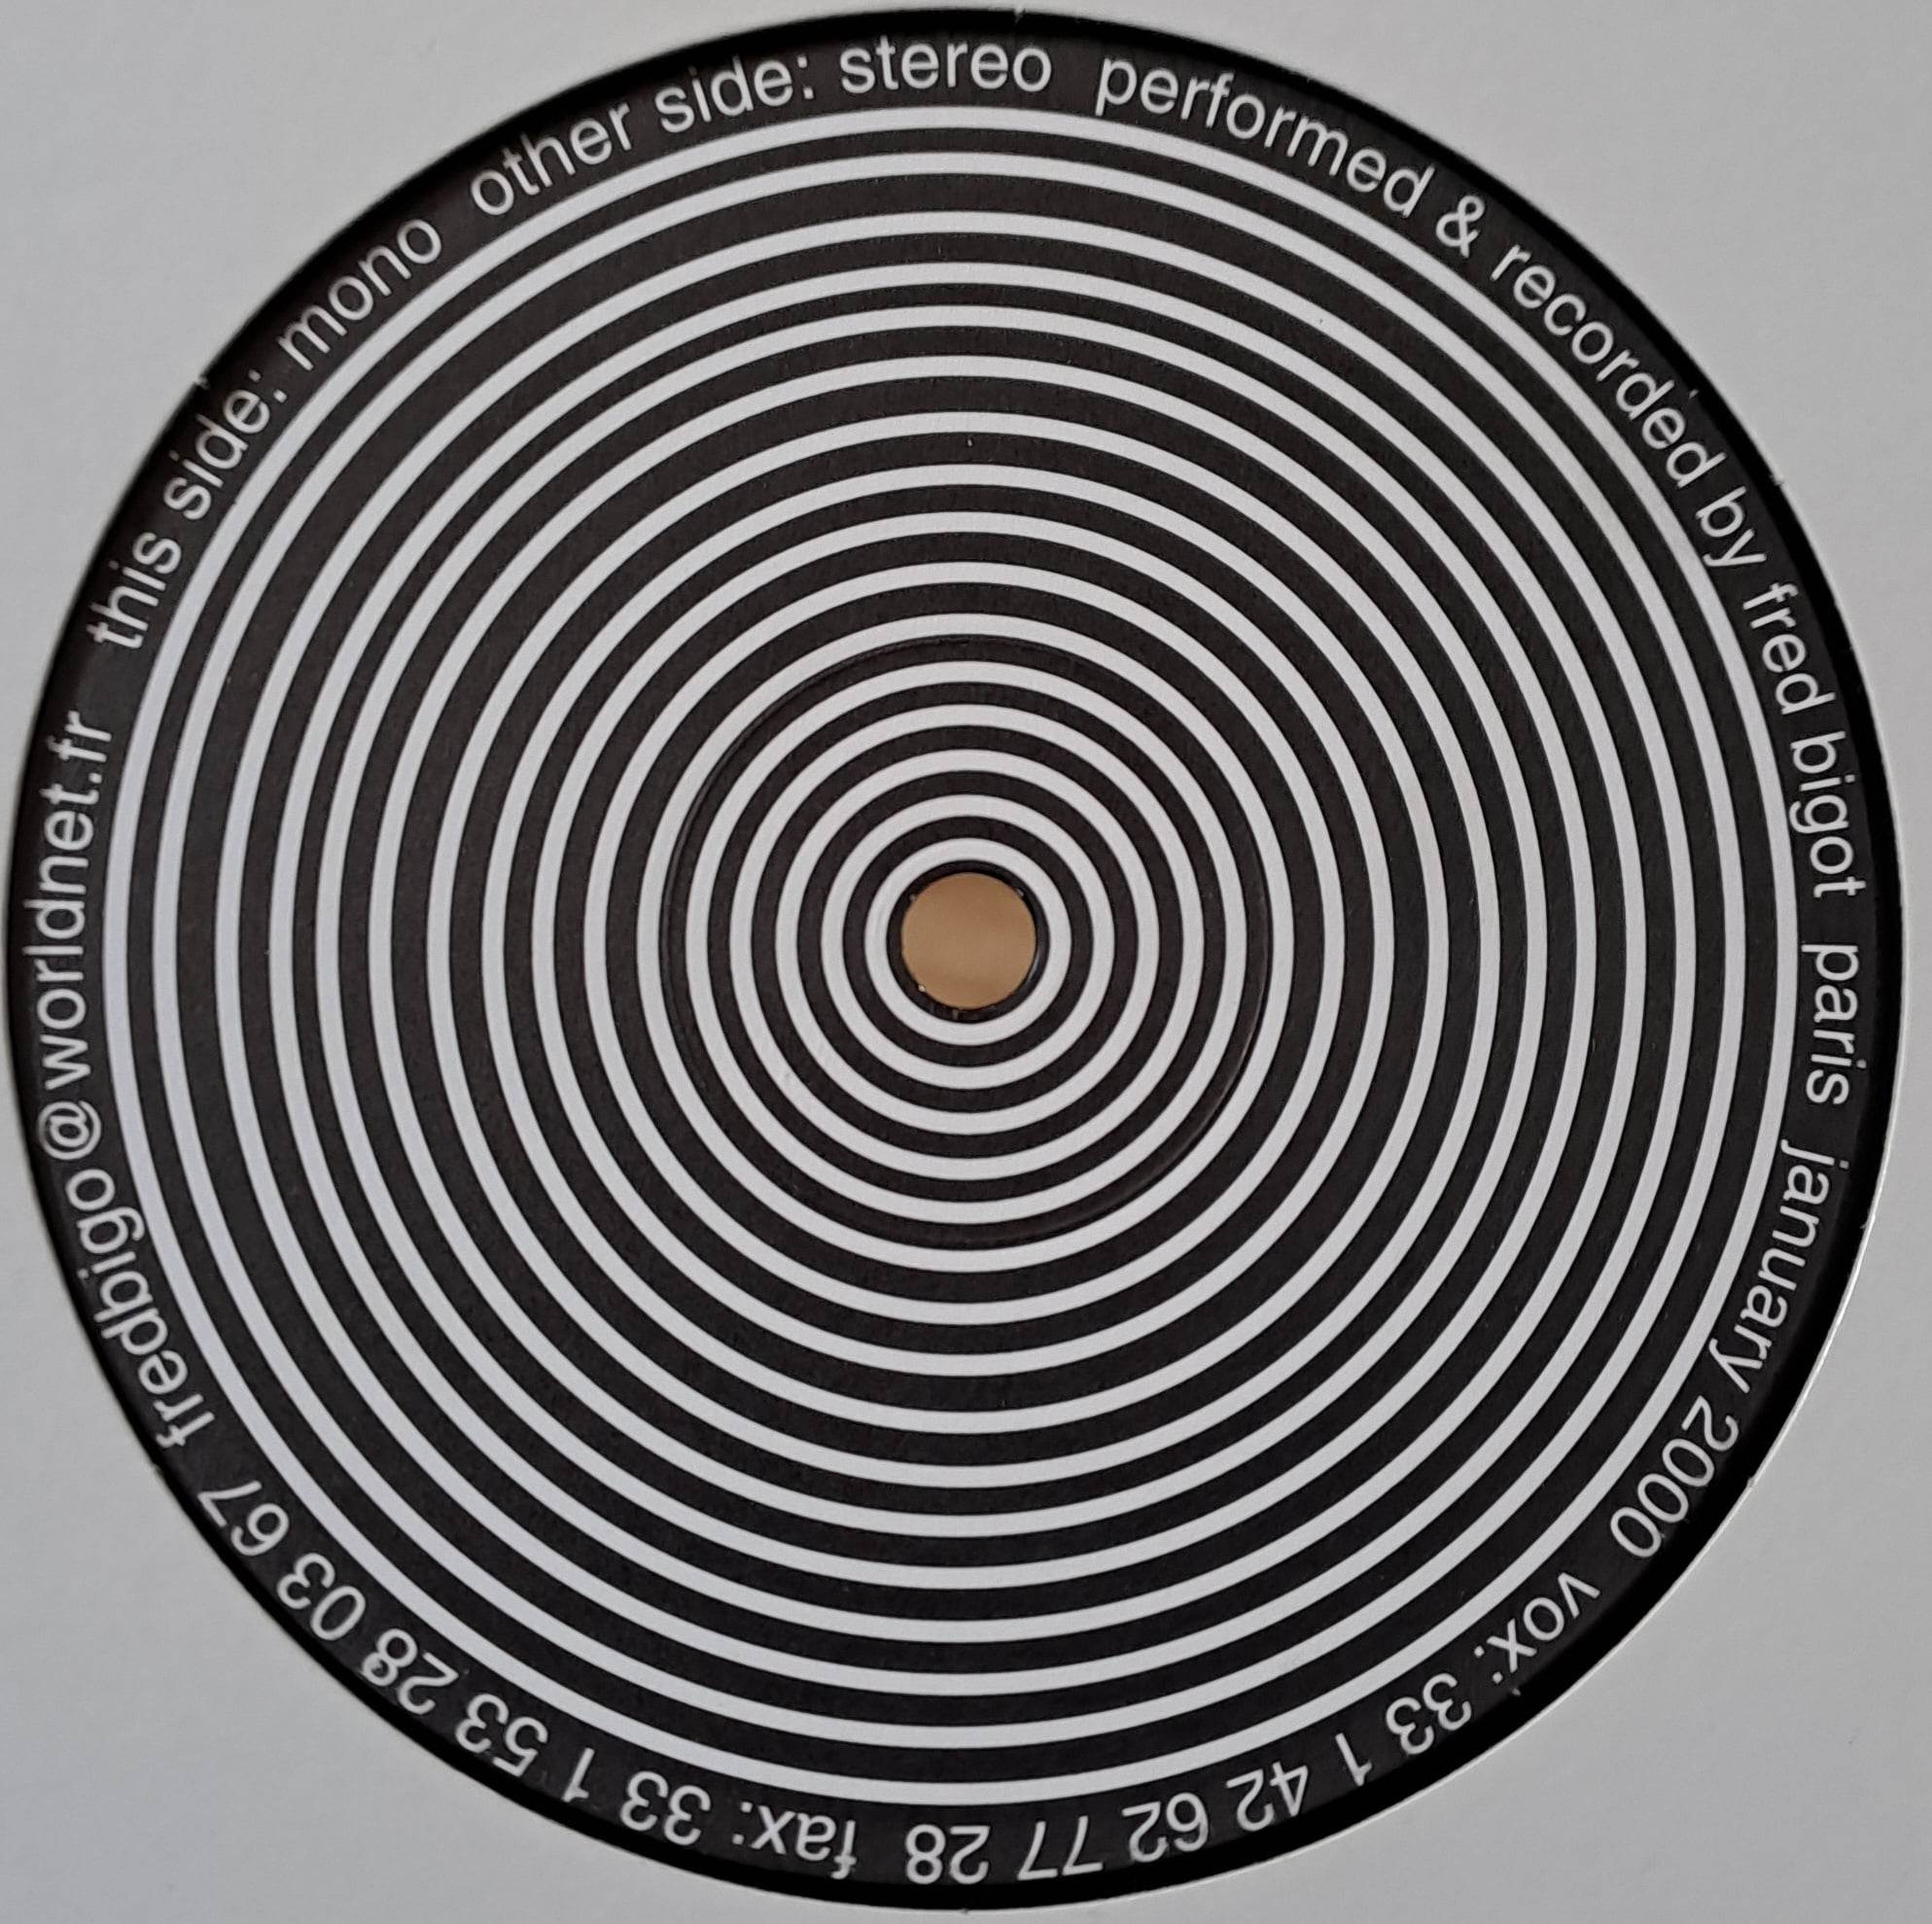 Mono / Stereo - vinyle Expérimentale